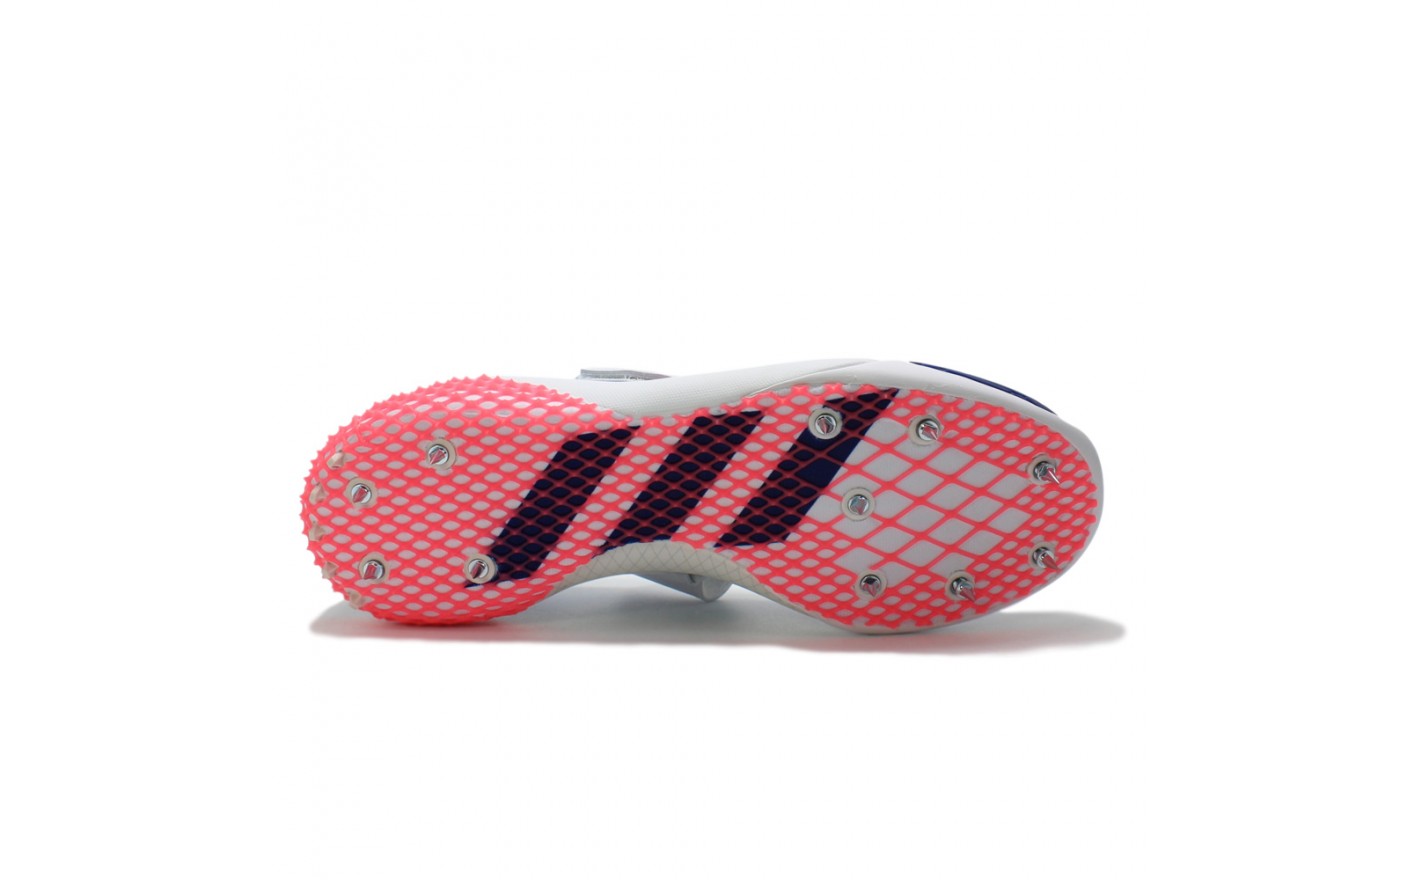 Adidas Javelin Unisex Blu Scarpe Chiodate e da Pista per atletica specialistica uomo e donna - 2